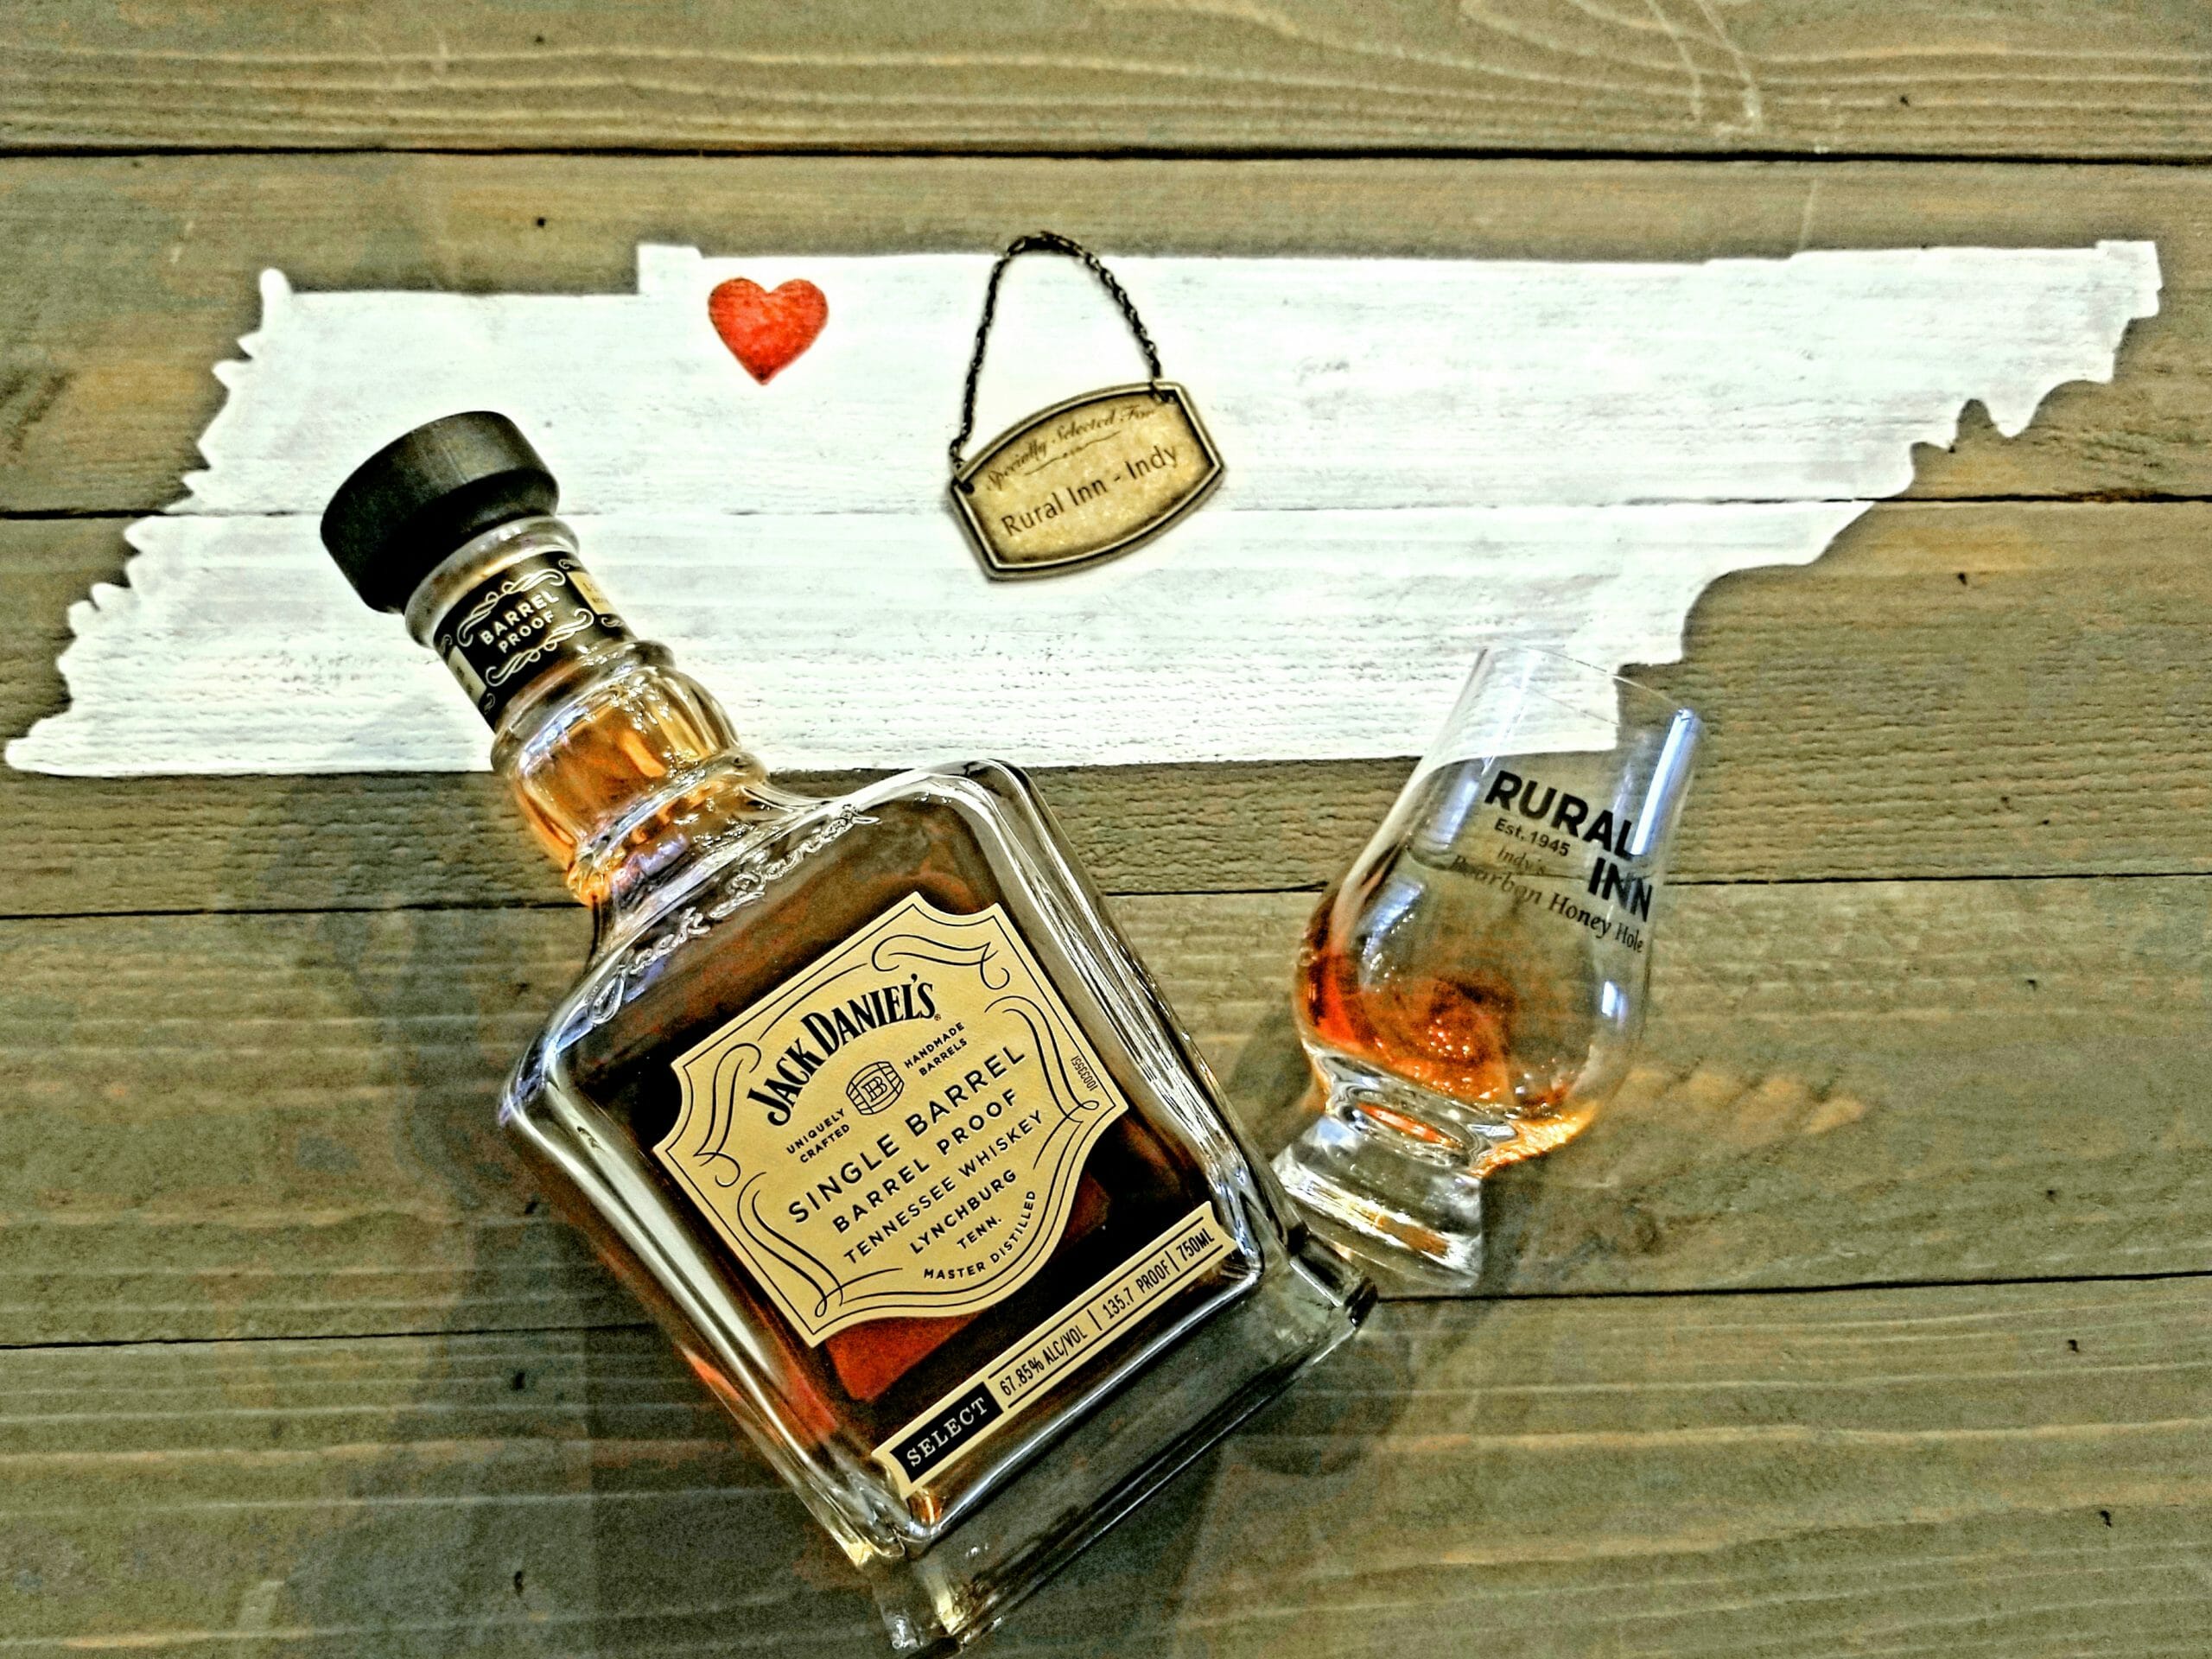 Jack Daniel’s Single Barrel, Barrel Proof Tennessee Whiskey Review (Rural Inn #1)